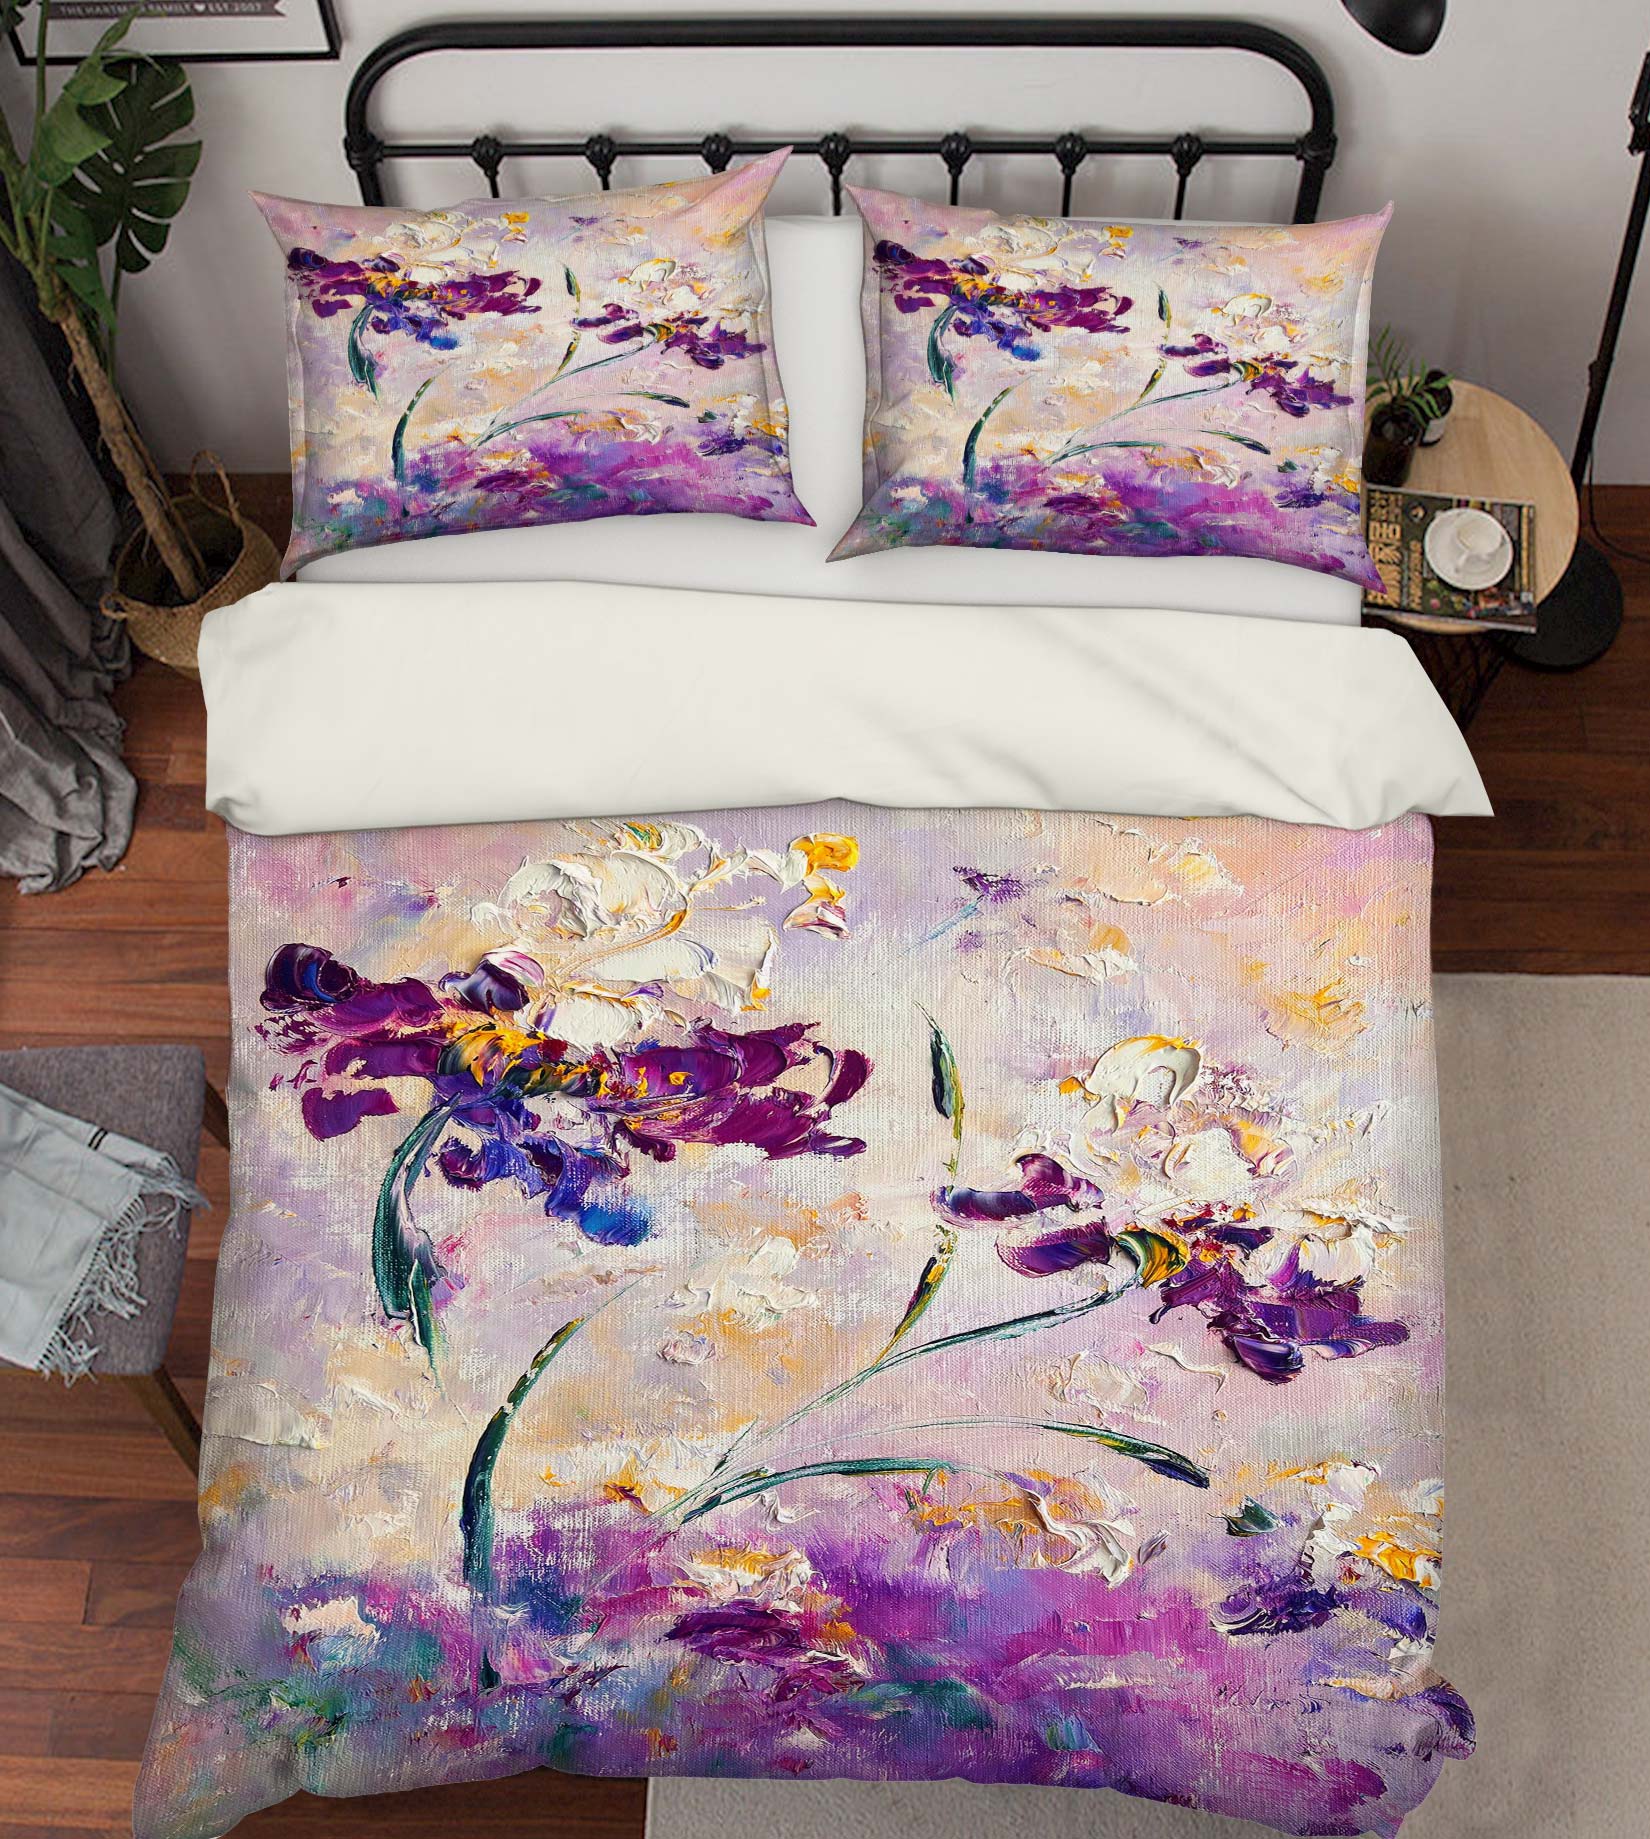 3D Flower Paint 507 Skromova Marina Bedding Bed Pillowcases Quilt